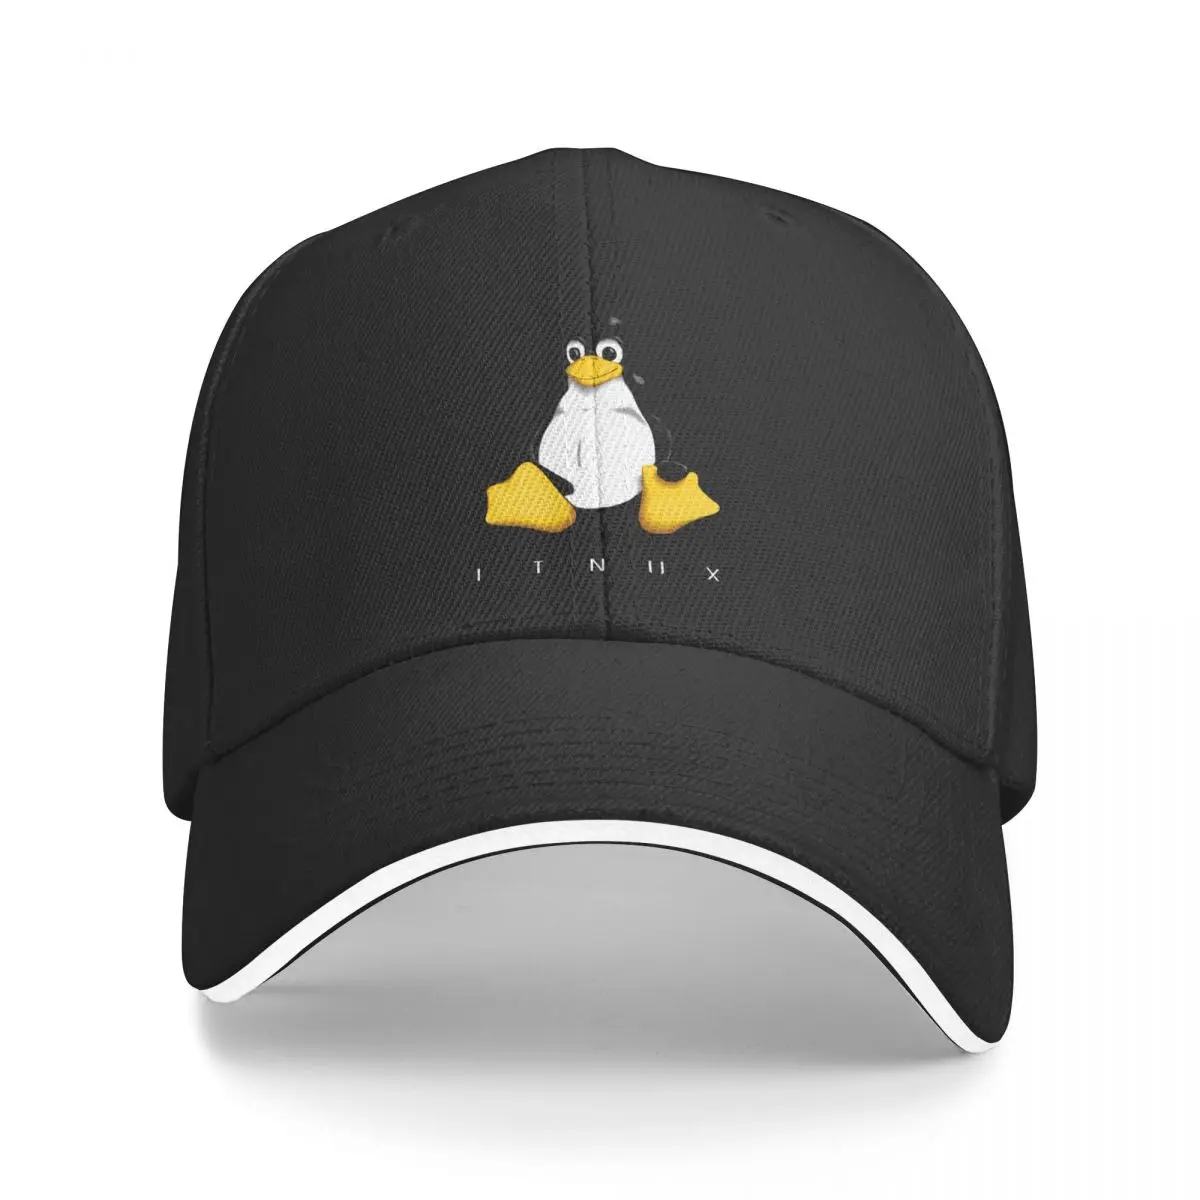 

LINUX Computer Programmer Men Baseball Caps Peaked Cap Sun Shade Cycling Hat